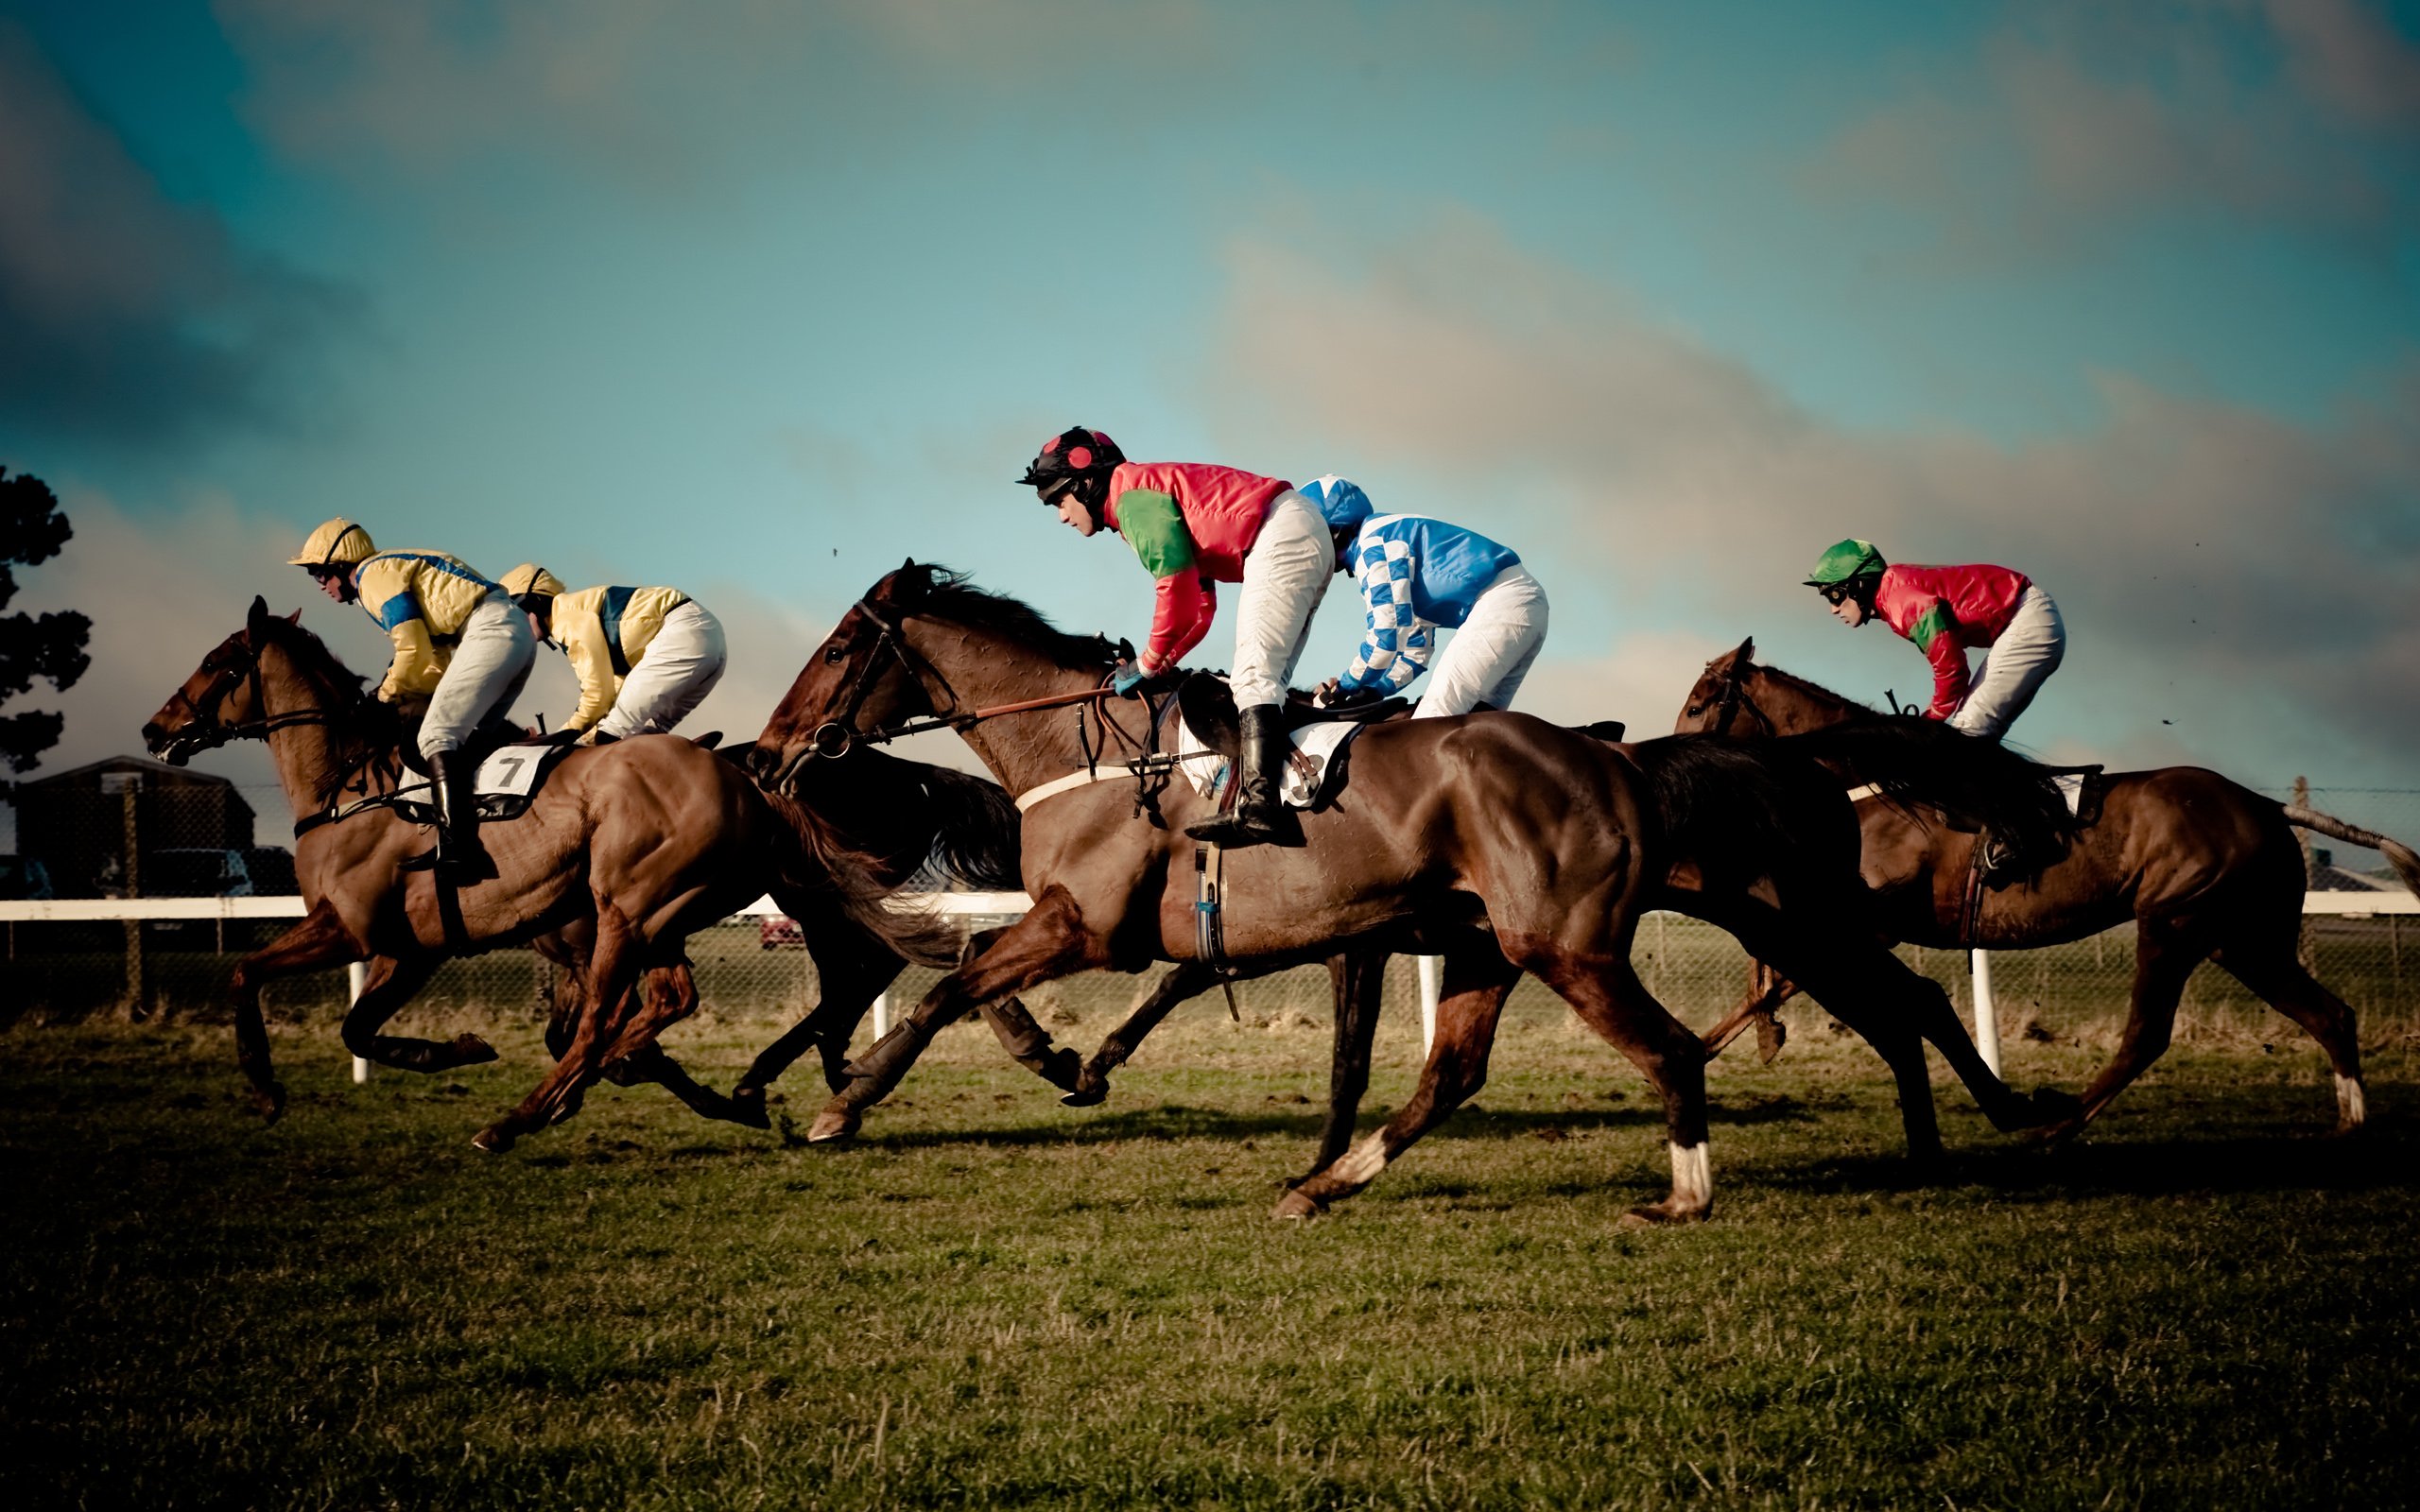 horse racing wallpaper,horse,animal sports,horse racing,jockey,equestrian sport